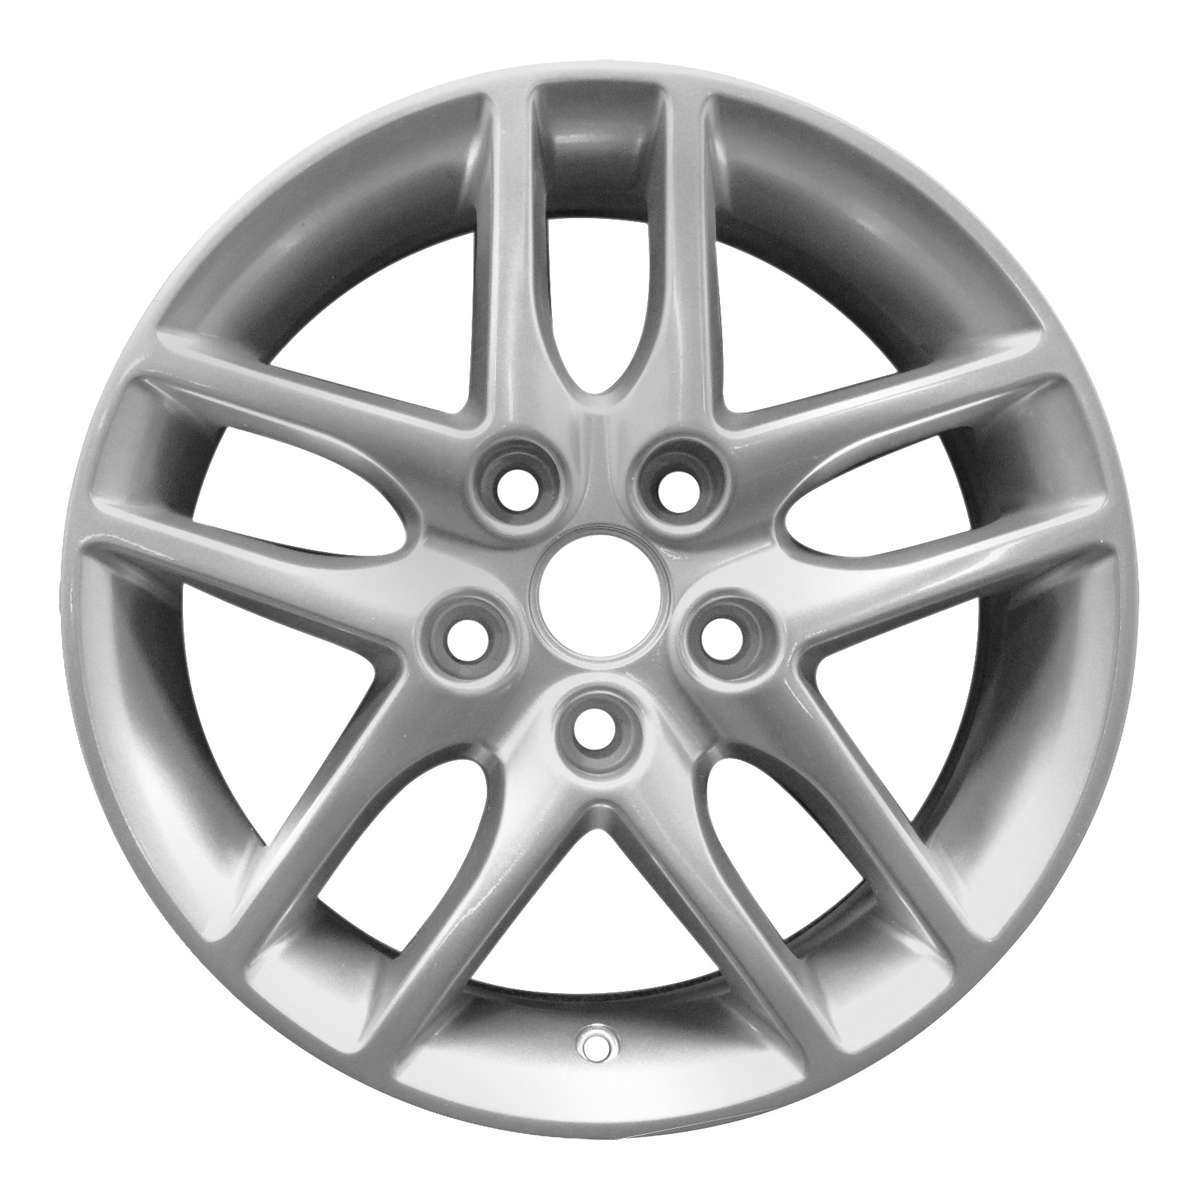 2011 Ford Fusion 16" OEM Wheel Rim W3798S